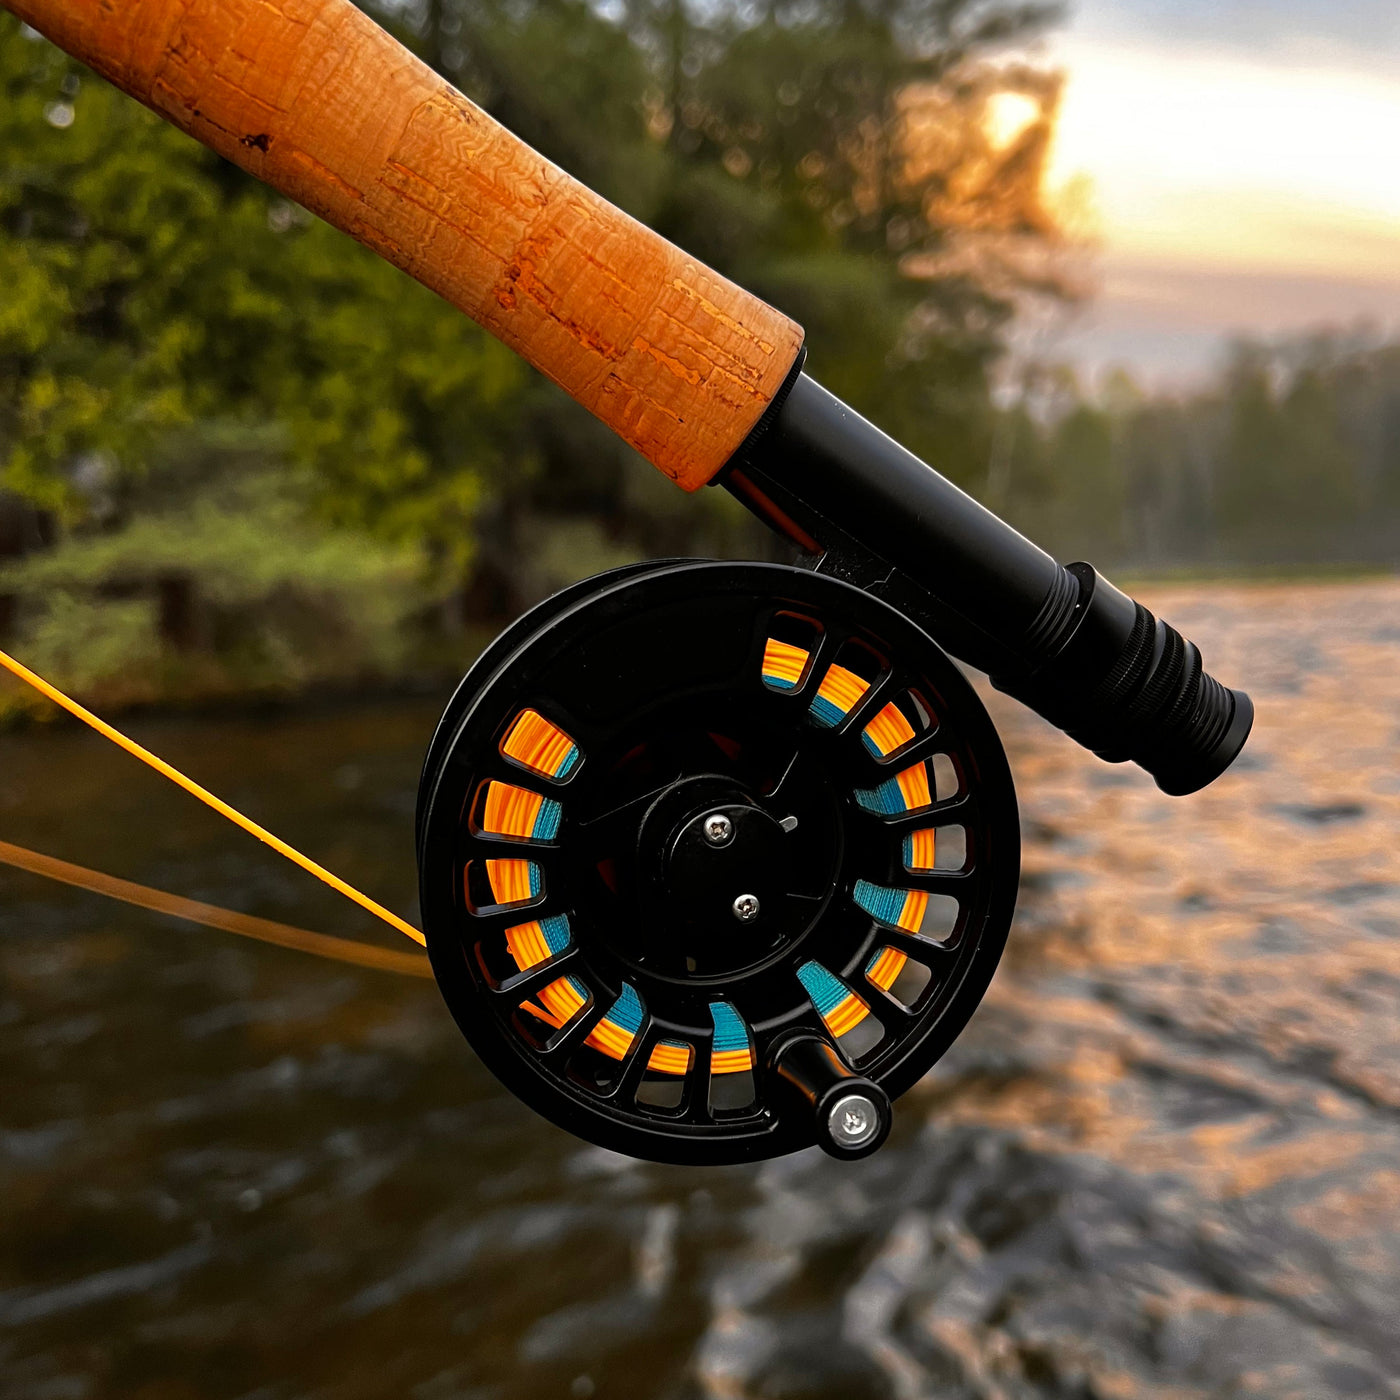 The Opener Fly Fishing Rod & Reel Combo